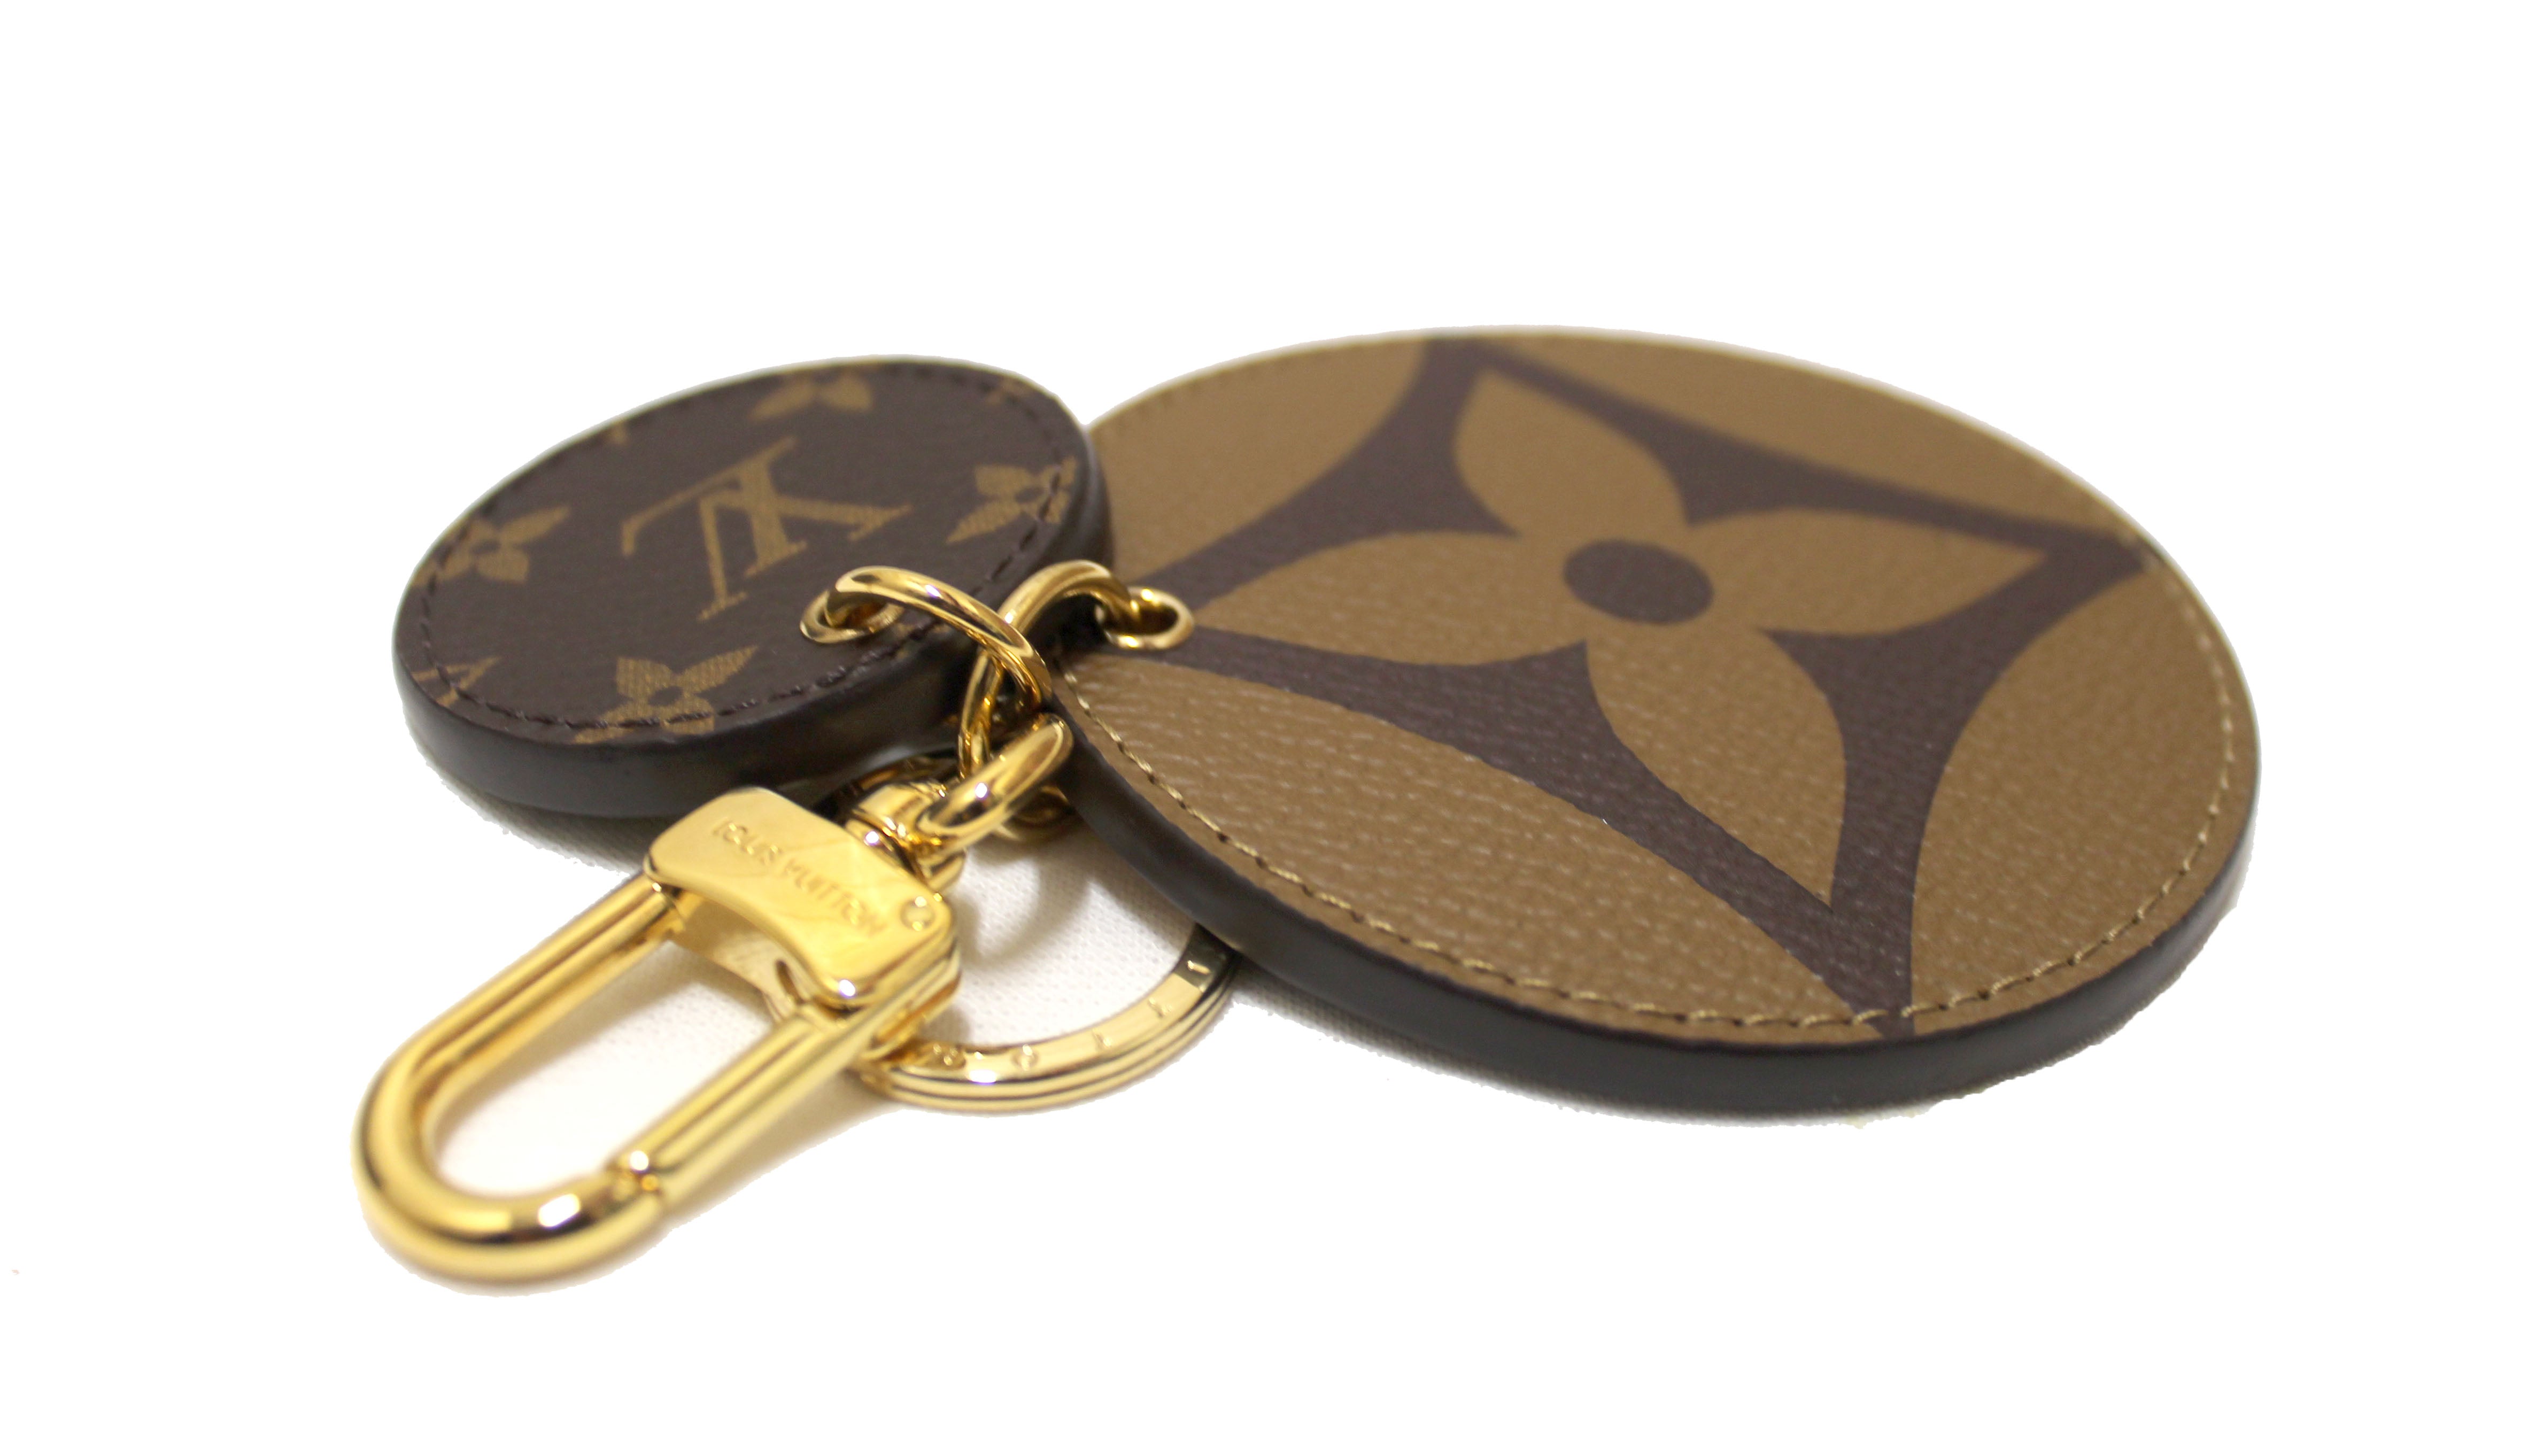 Louis Vuitton Monogram Reverse Key Holder and Bag Charm